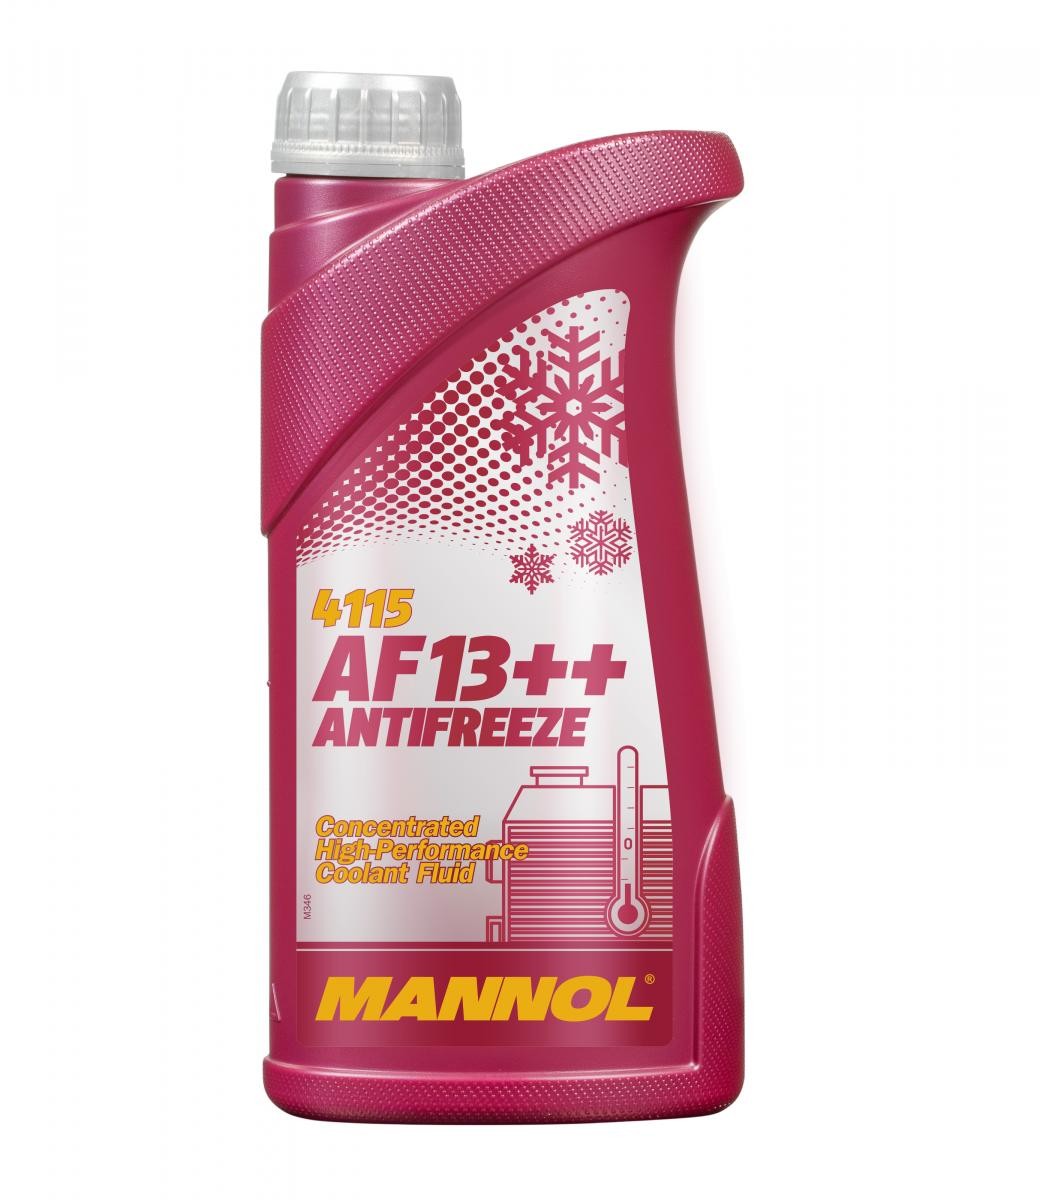 PEUGEOT SPEEDAKE Antivries / koelvloeistof G12 rood, 1L, -38(50/50) MANNOL AF13++, High-performance MN4115-1